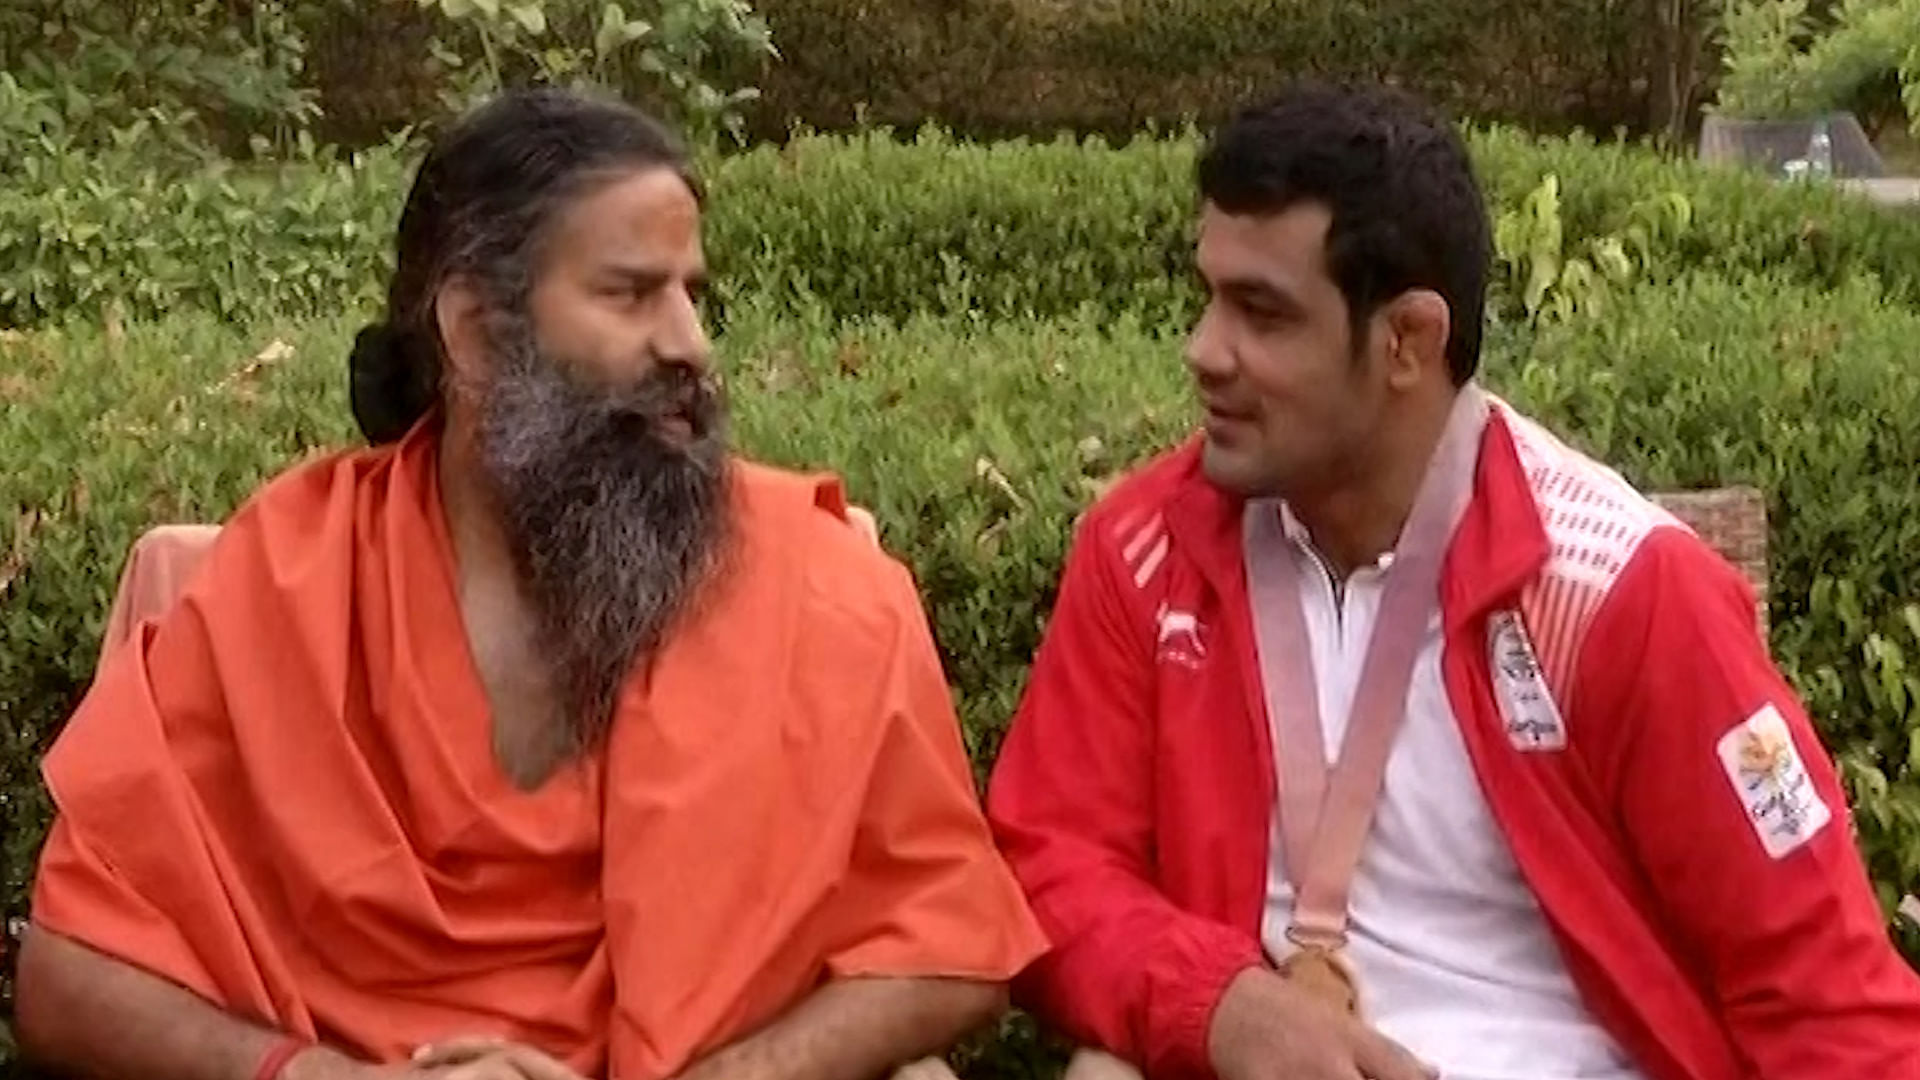  Sushil Kumar meet yoga guru Ramdev after his golden run at the 2018 Commonwealth Games.